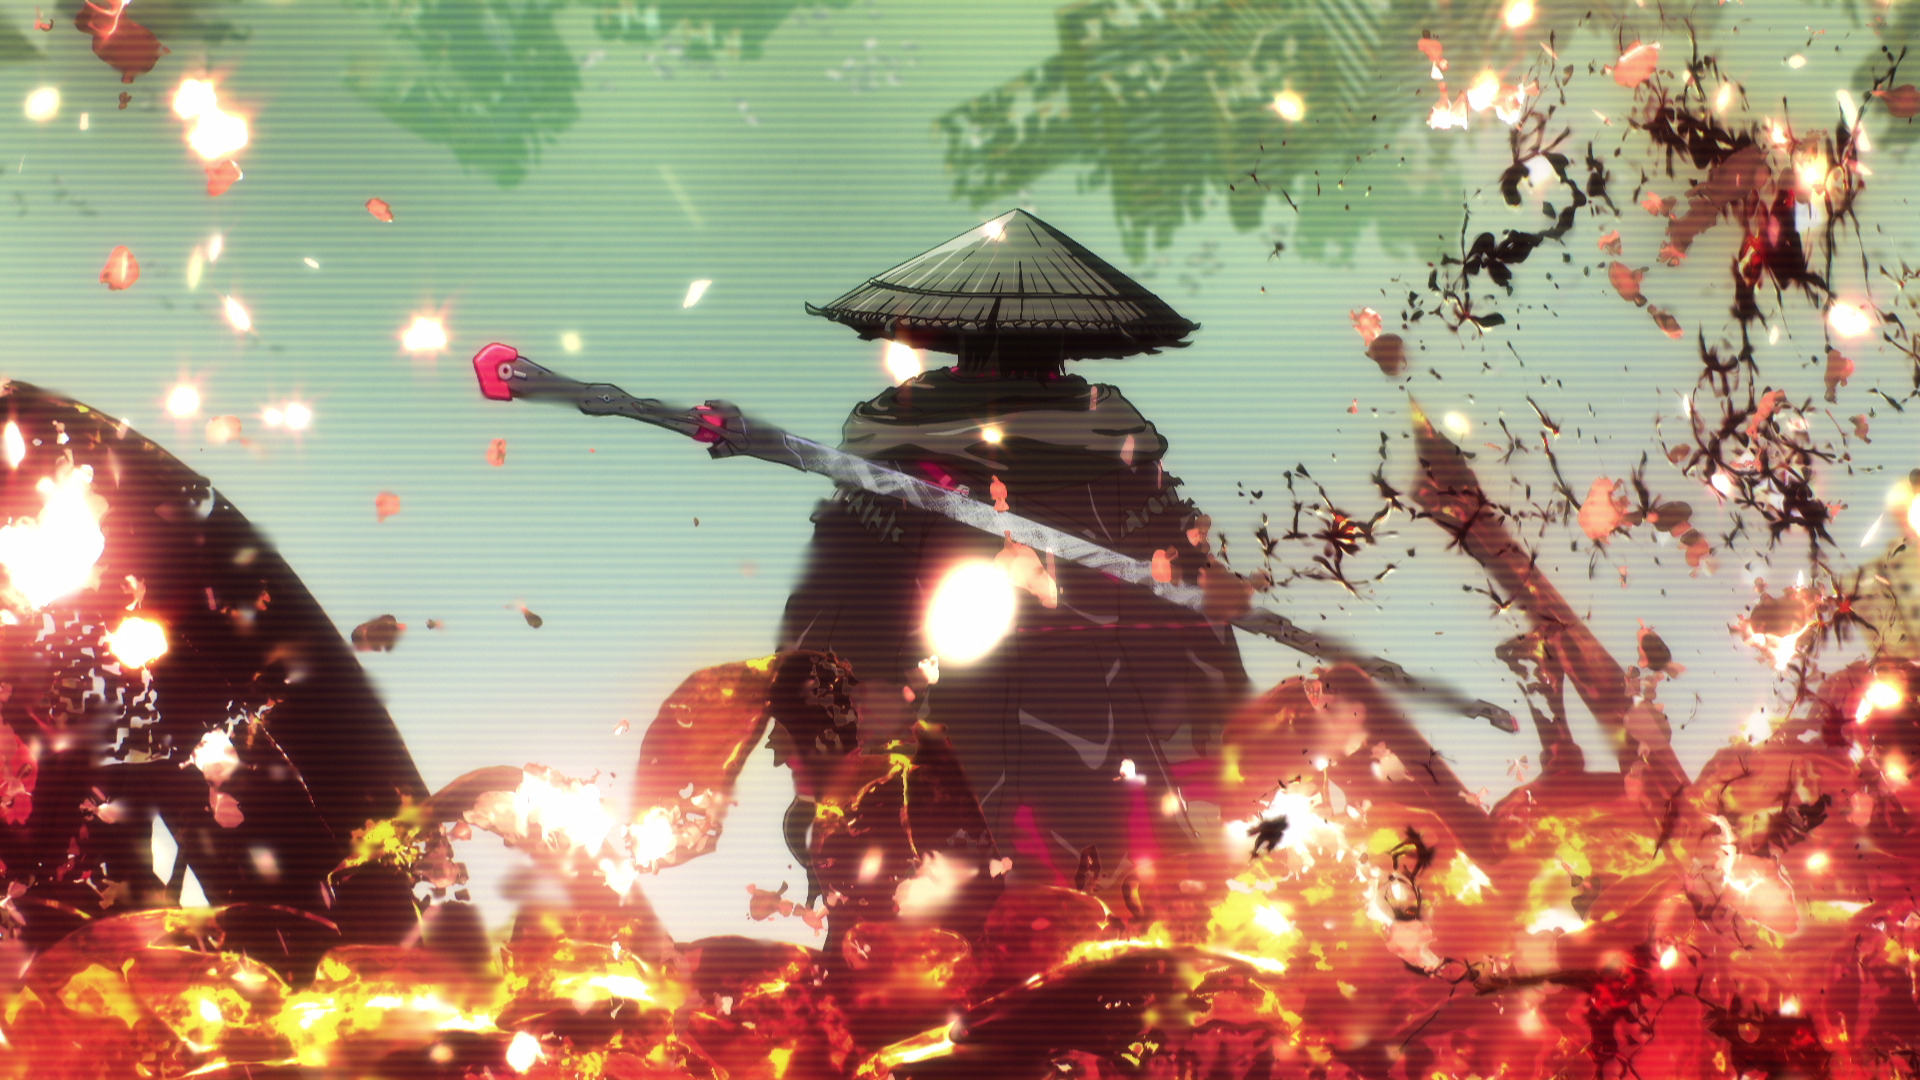 Video Game Scarlet Nexus HD Wallpaper | Background Image